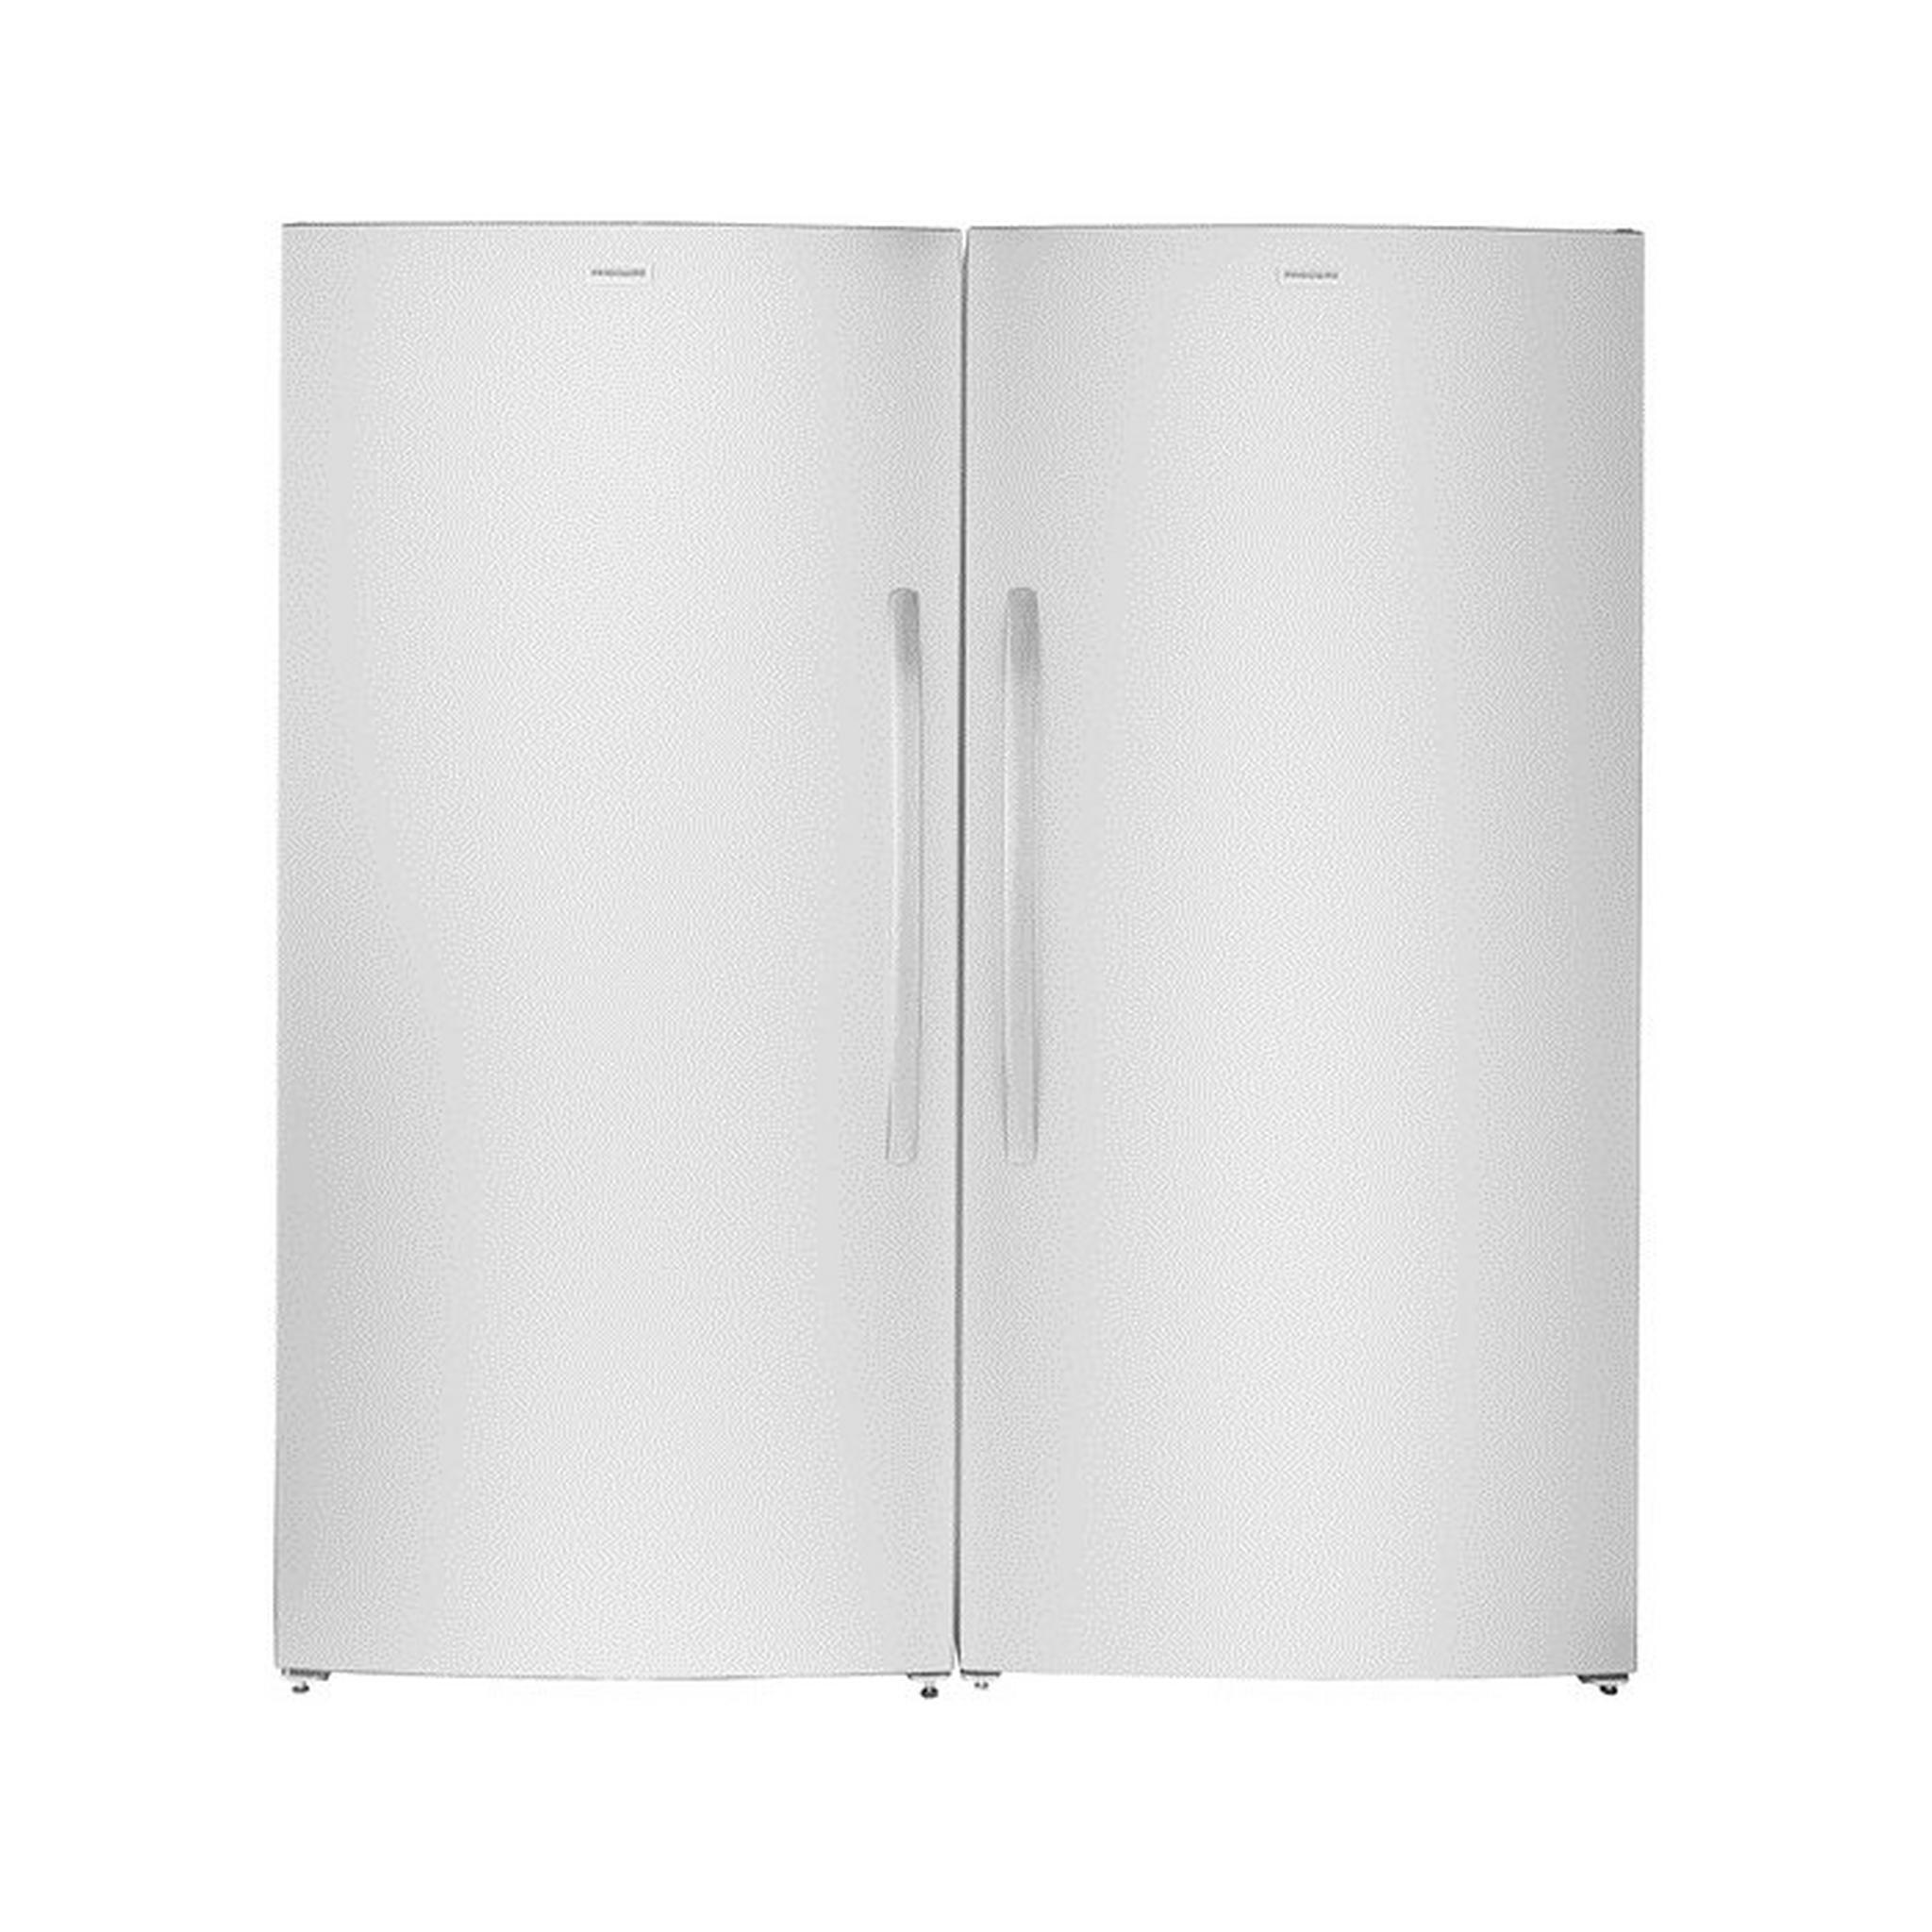 Frigidaire Upright Freezer + Single Door Refrigerator, 20 Cft, 566L,MFUF'21+MRAA21+KIT - White